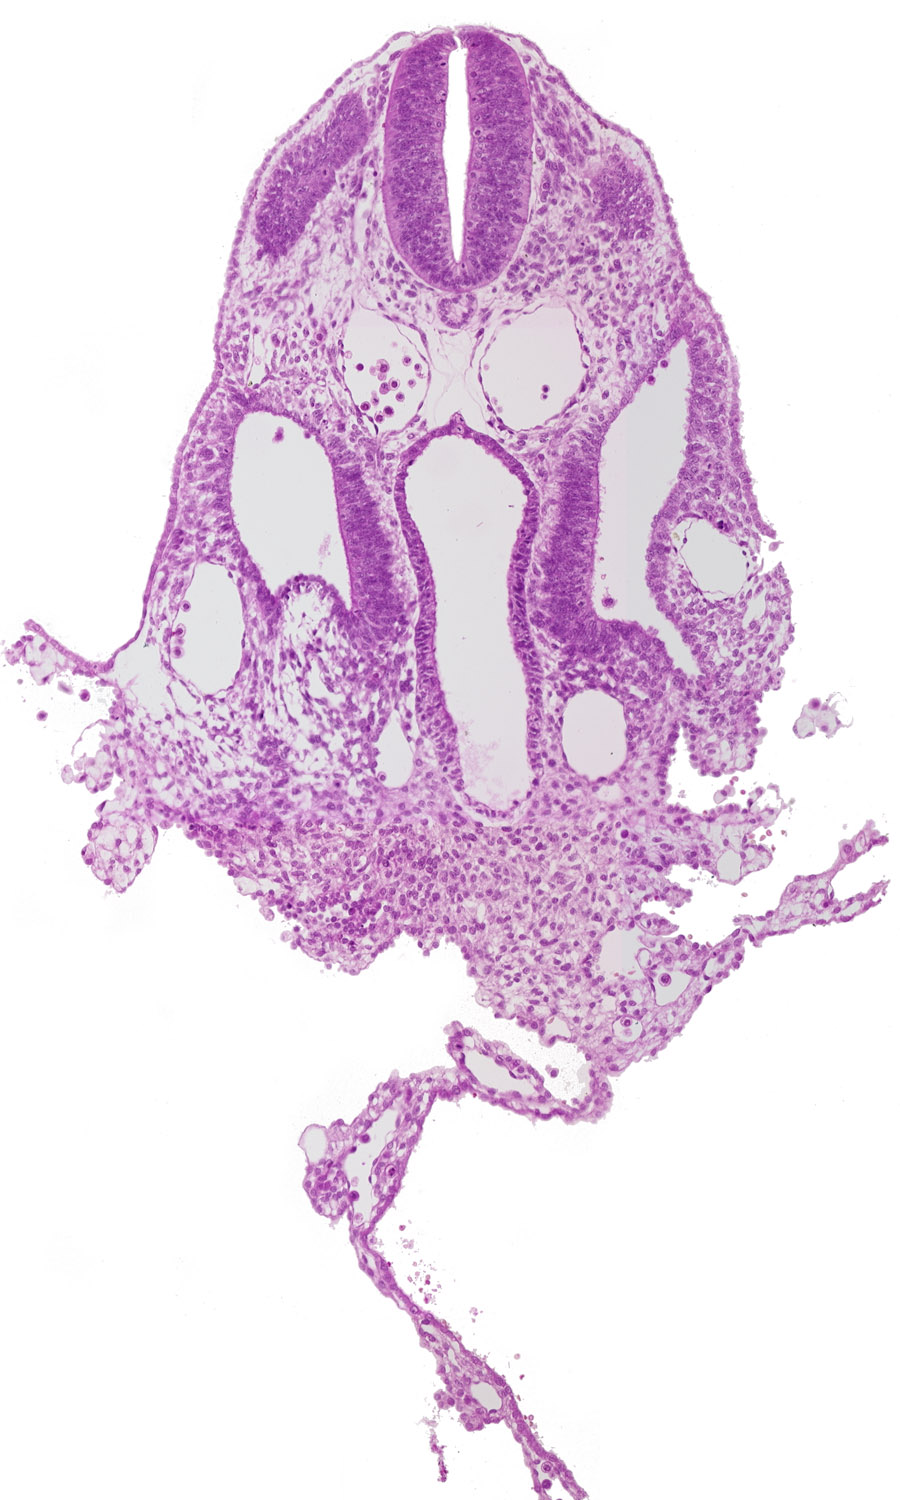 amnion attachment, dermatomyotome 7 (C-3), dorsal aorta, extra-embryonic coelom, left umbilical vein, mesothelium of umbilical vesicle, midgut, notochord, right umbilical vein, septum transversum, splanchnopleuric mesoderm, umbilical vesicle wall